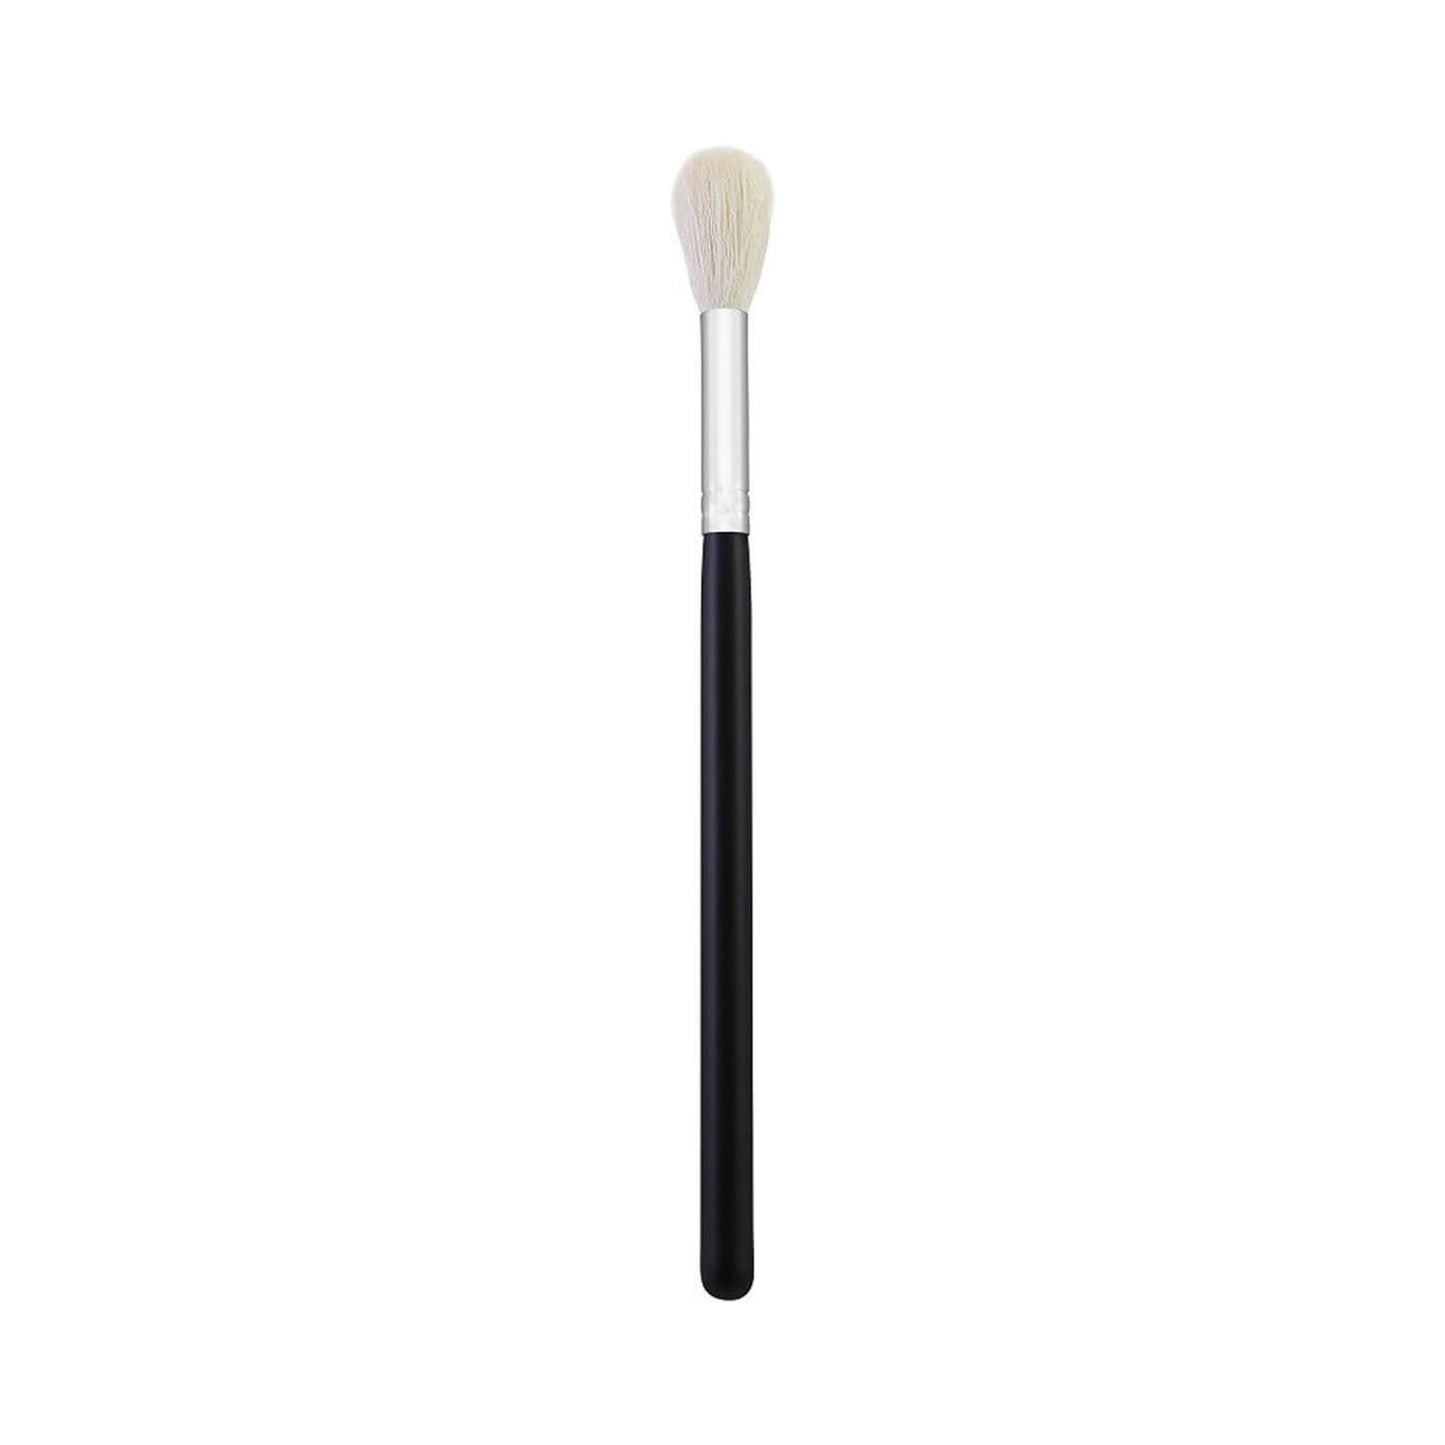 Morphe Cosmetics M510 Pro Round Blender Brush